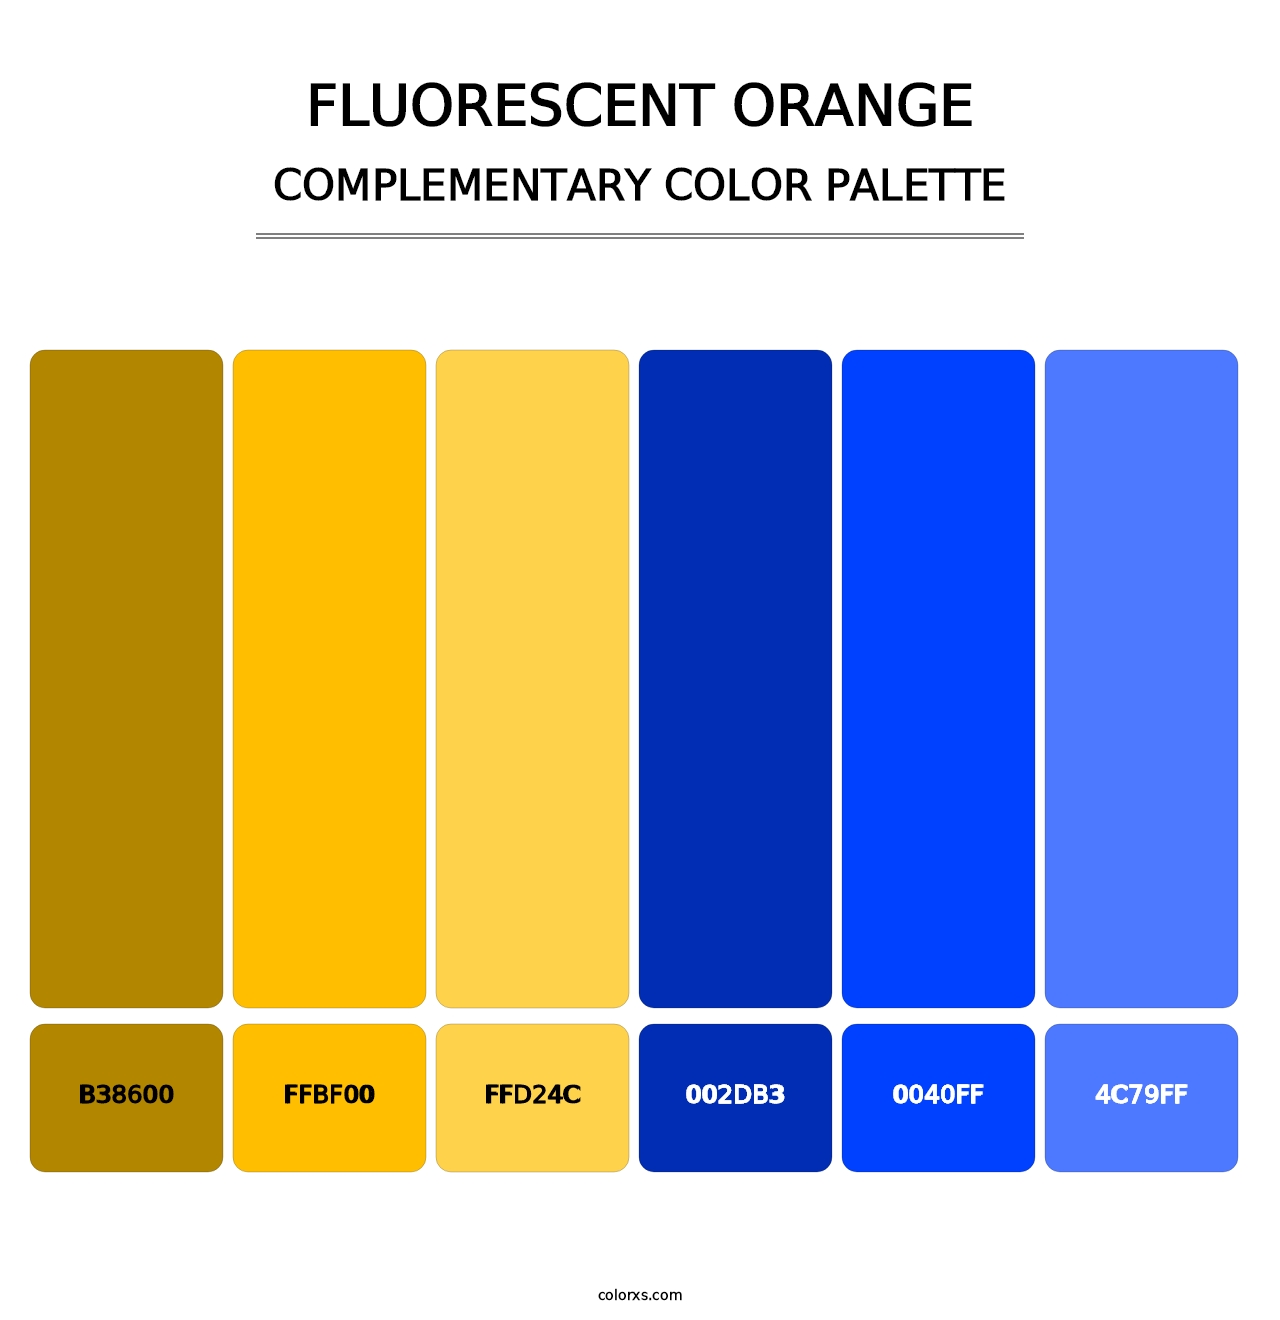 Fluorescent Orange - Complementary Color Palette